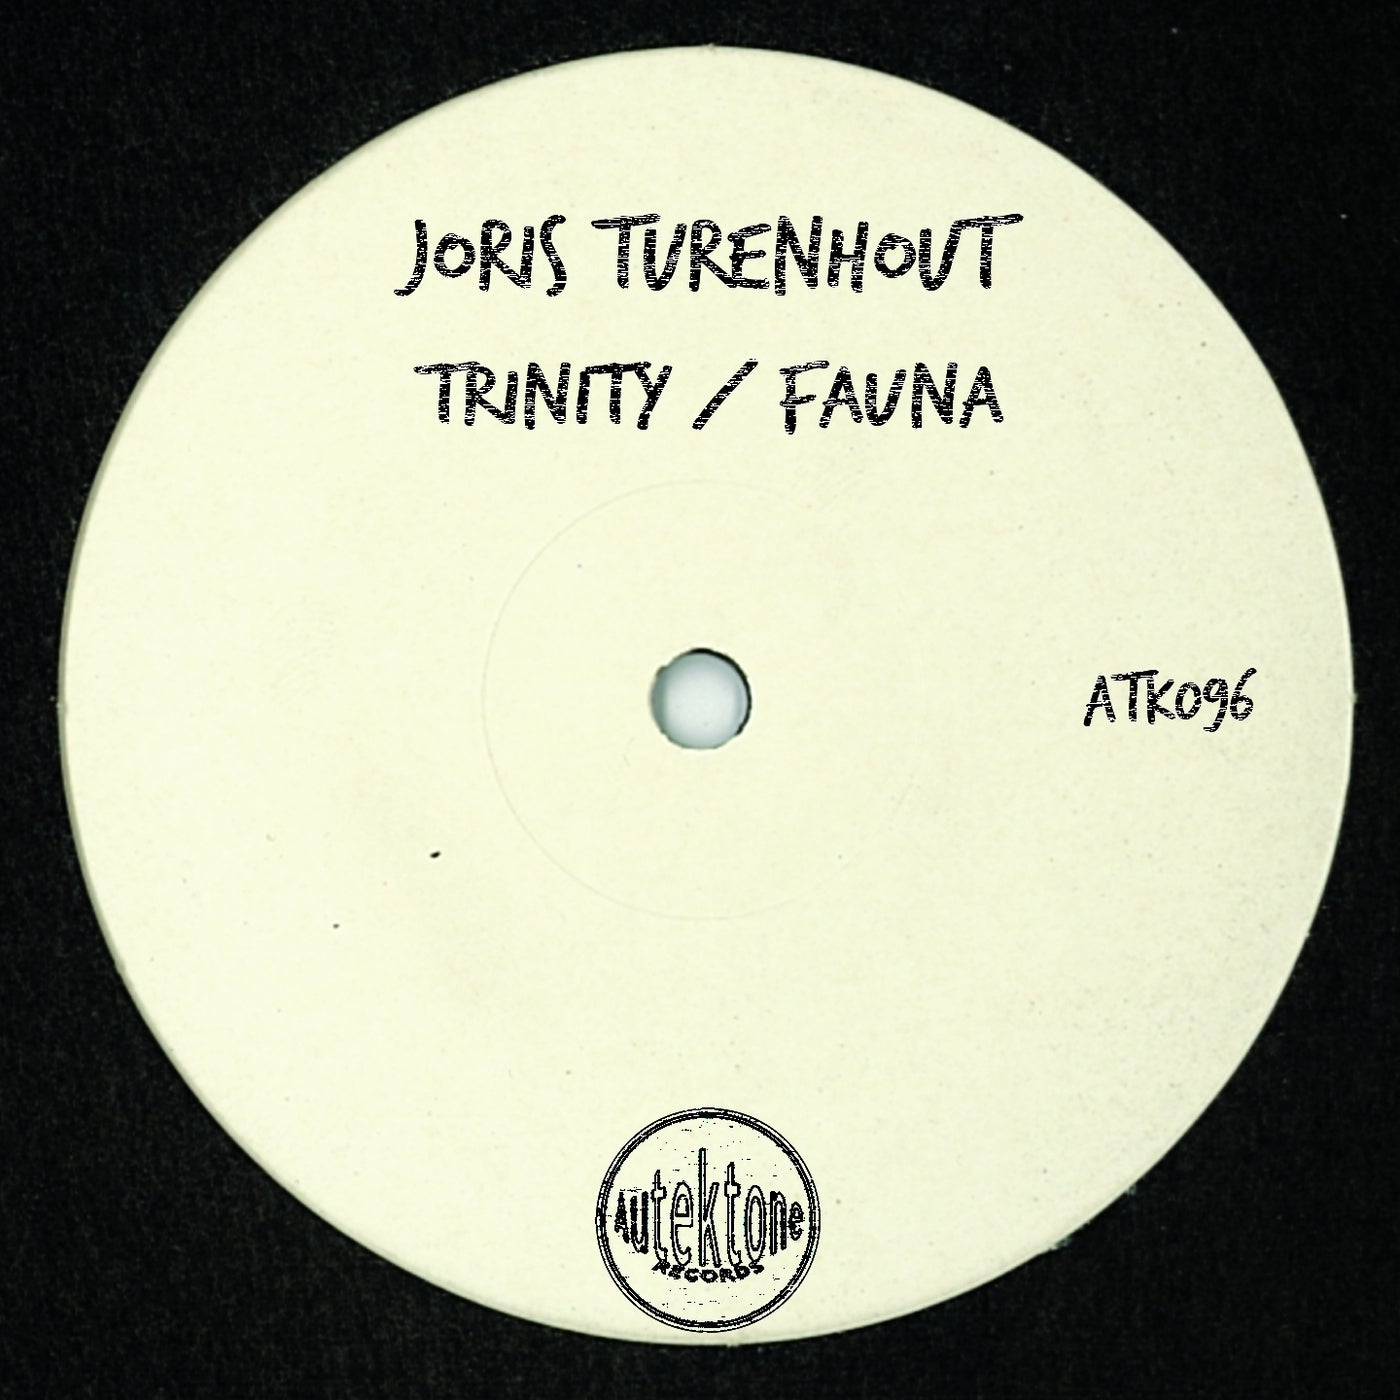 Download Joris Turenhout - Trinity / Fauna on Electrobuzz